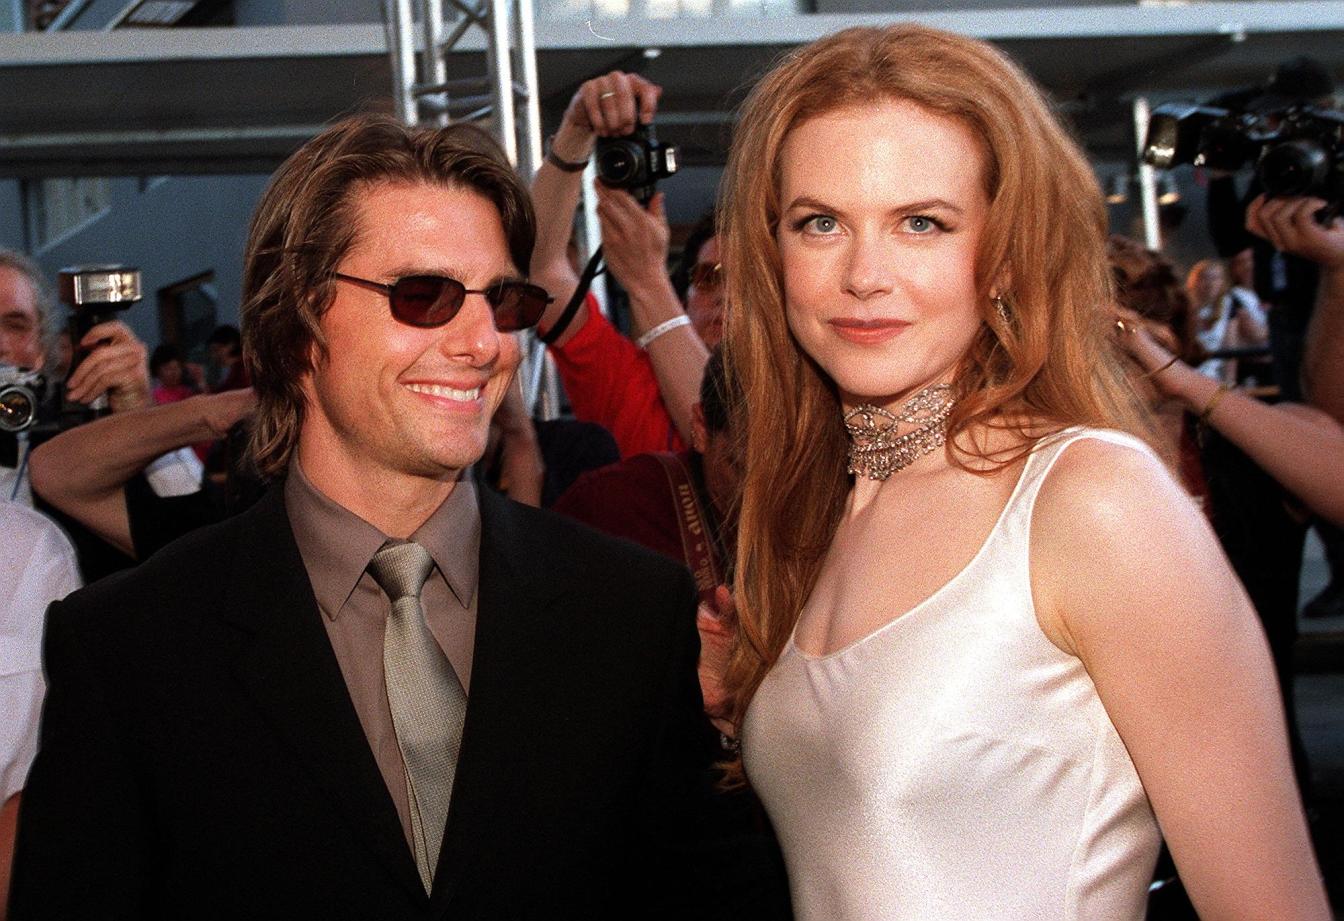 Nicole Kidman, then-wife of Tom Cruise, in 1999